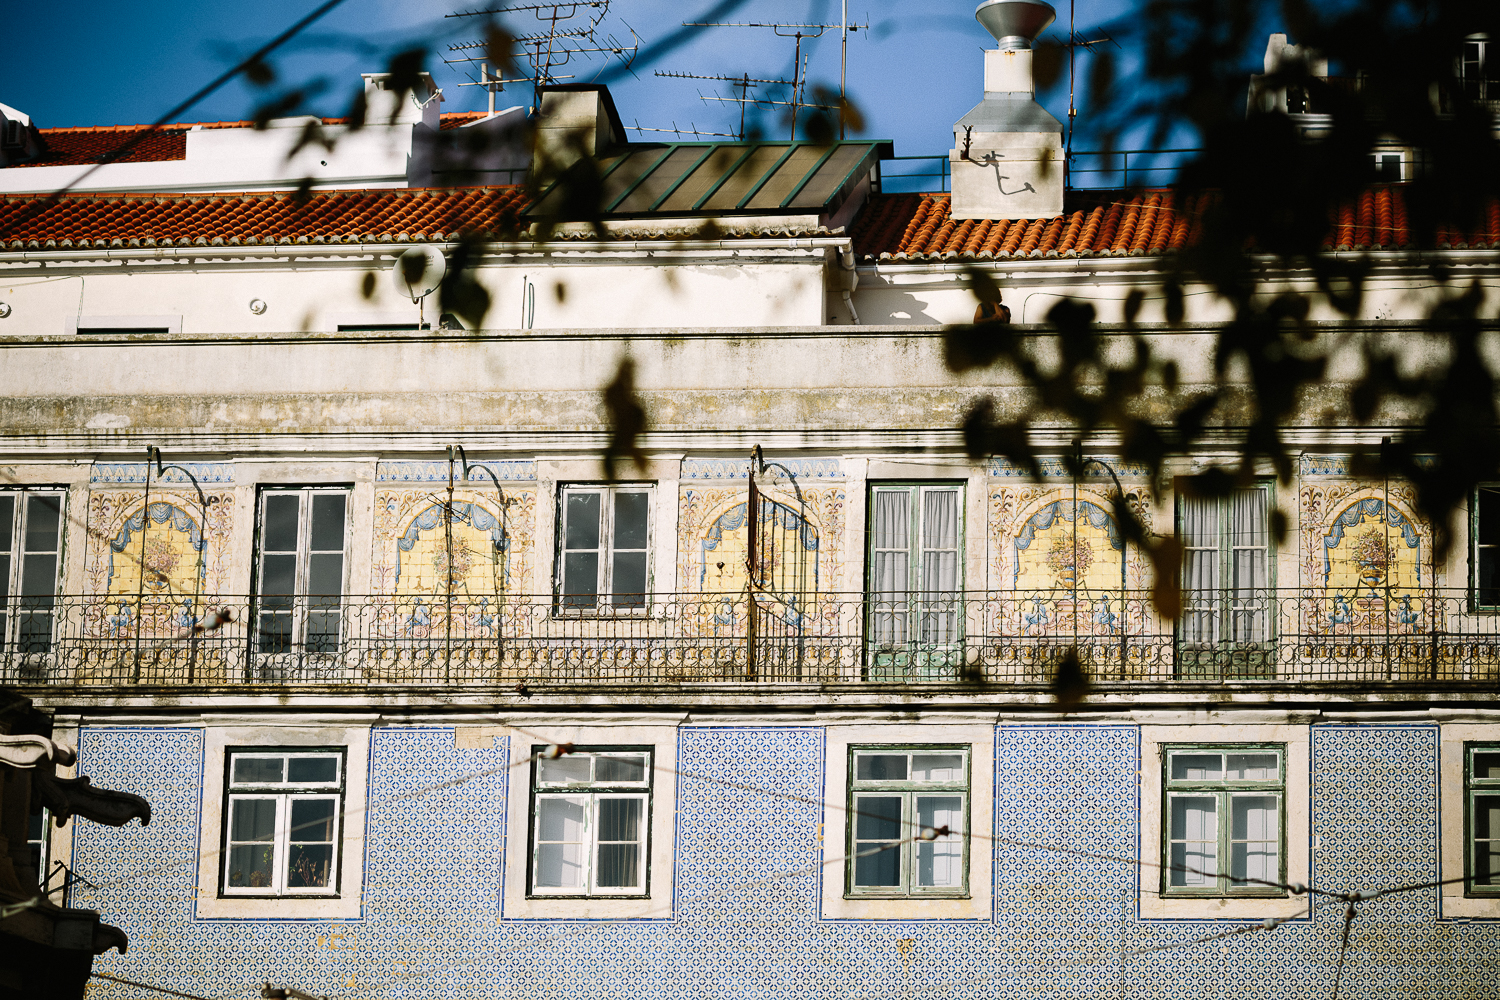  Blue Skies Lisbon 2016 - www.ebobrie.com/blue-skies-lisbon-2016 